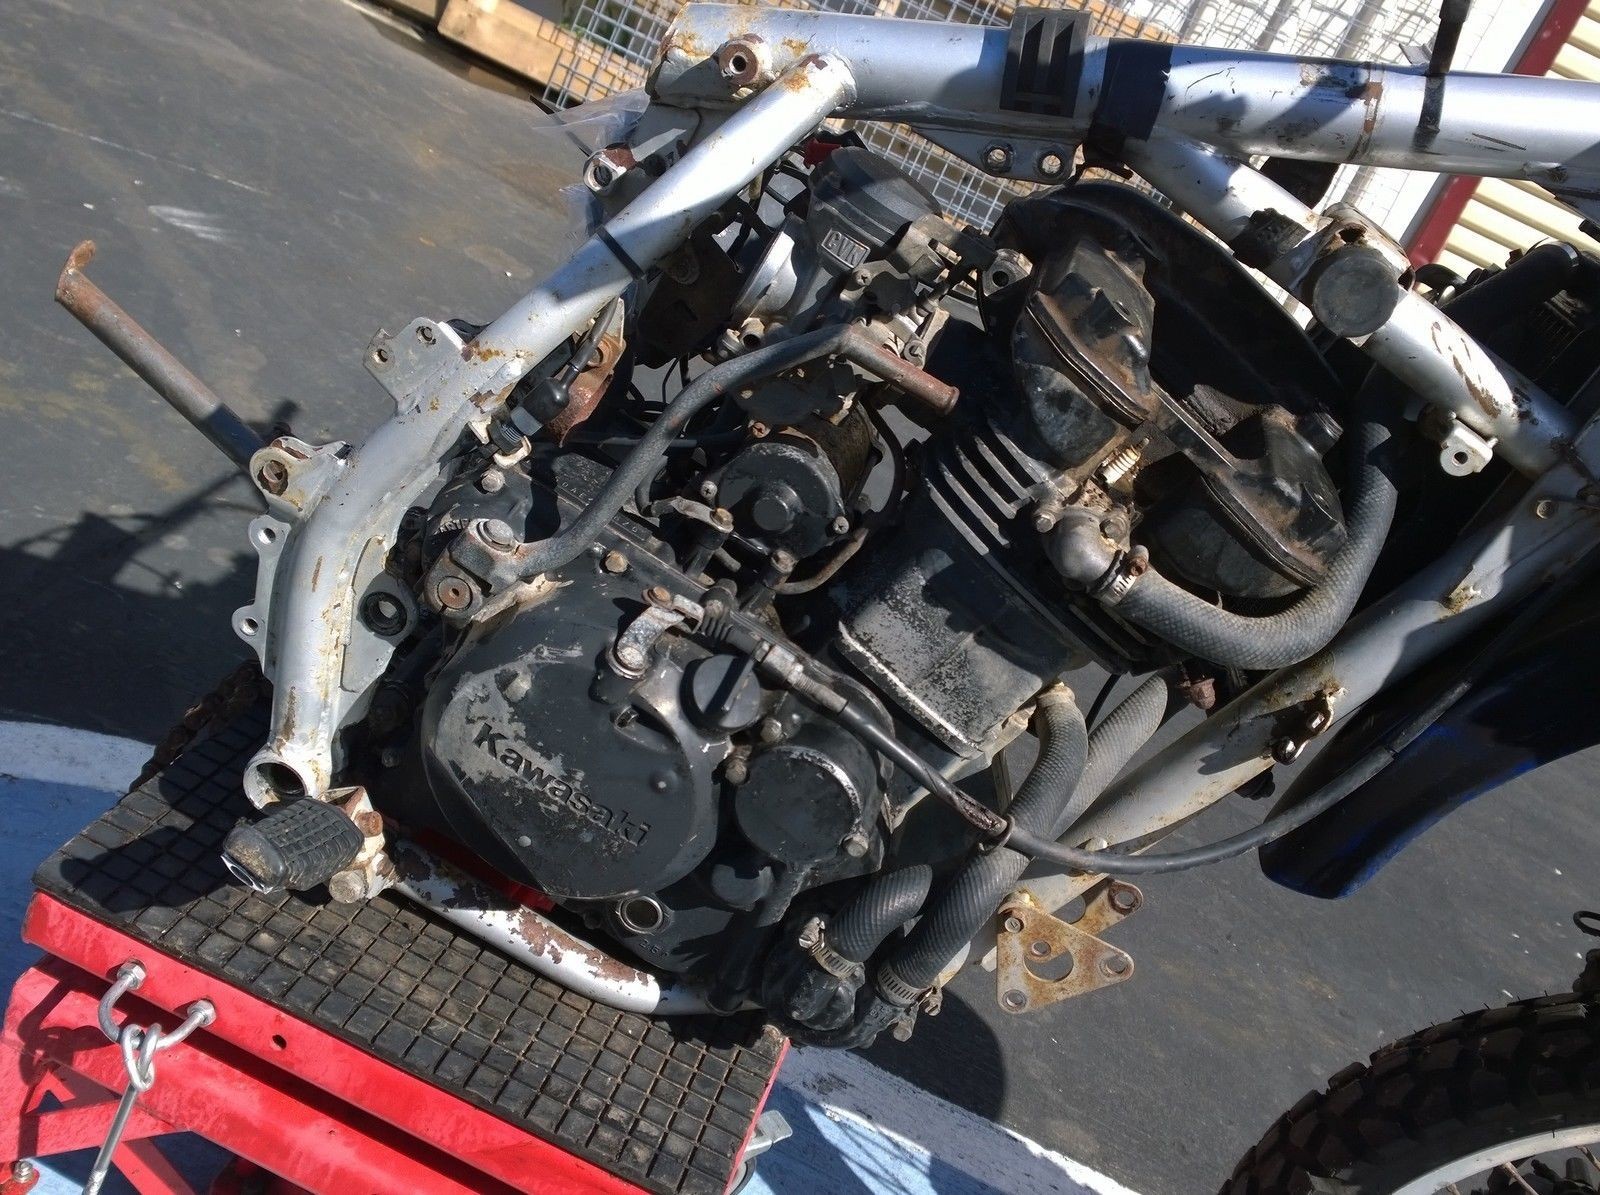 Motor Parts Engine Bottom End for Kawasaki KLR650 KLR 650 1989 89 Head no good